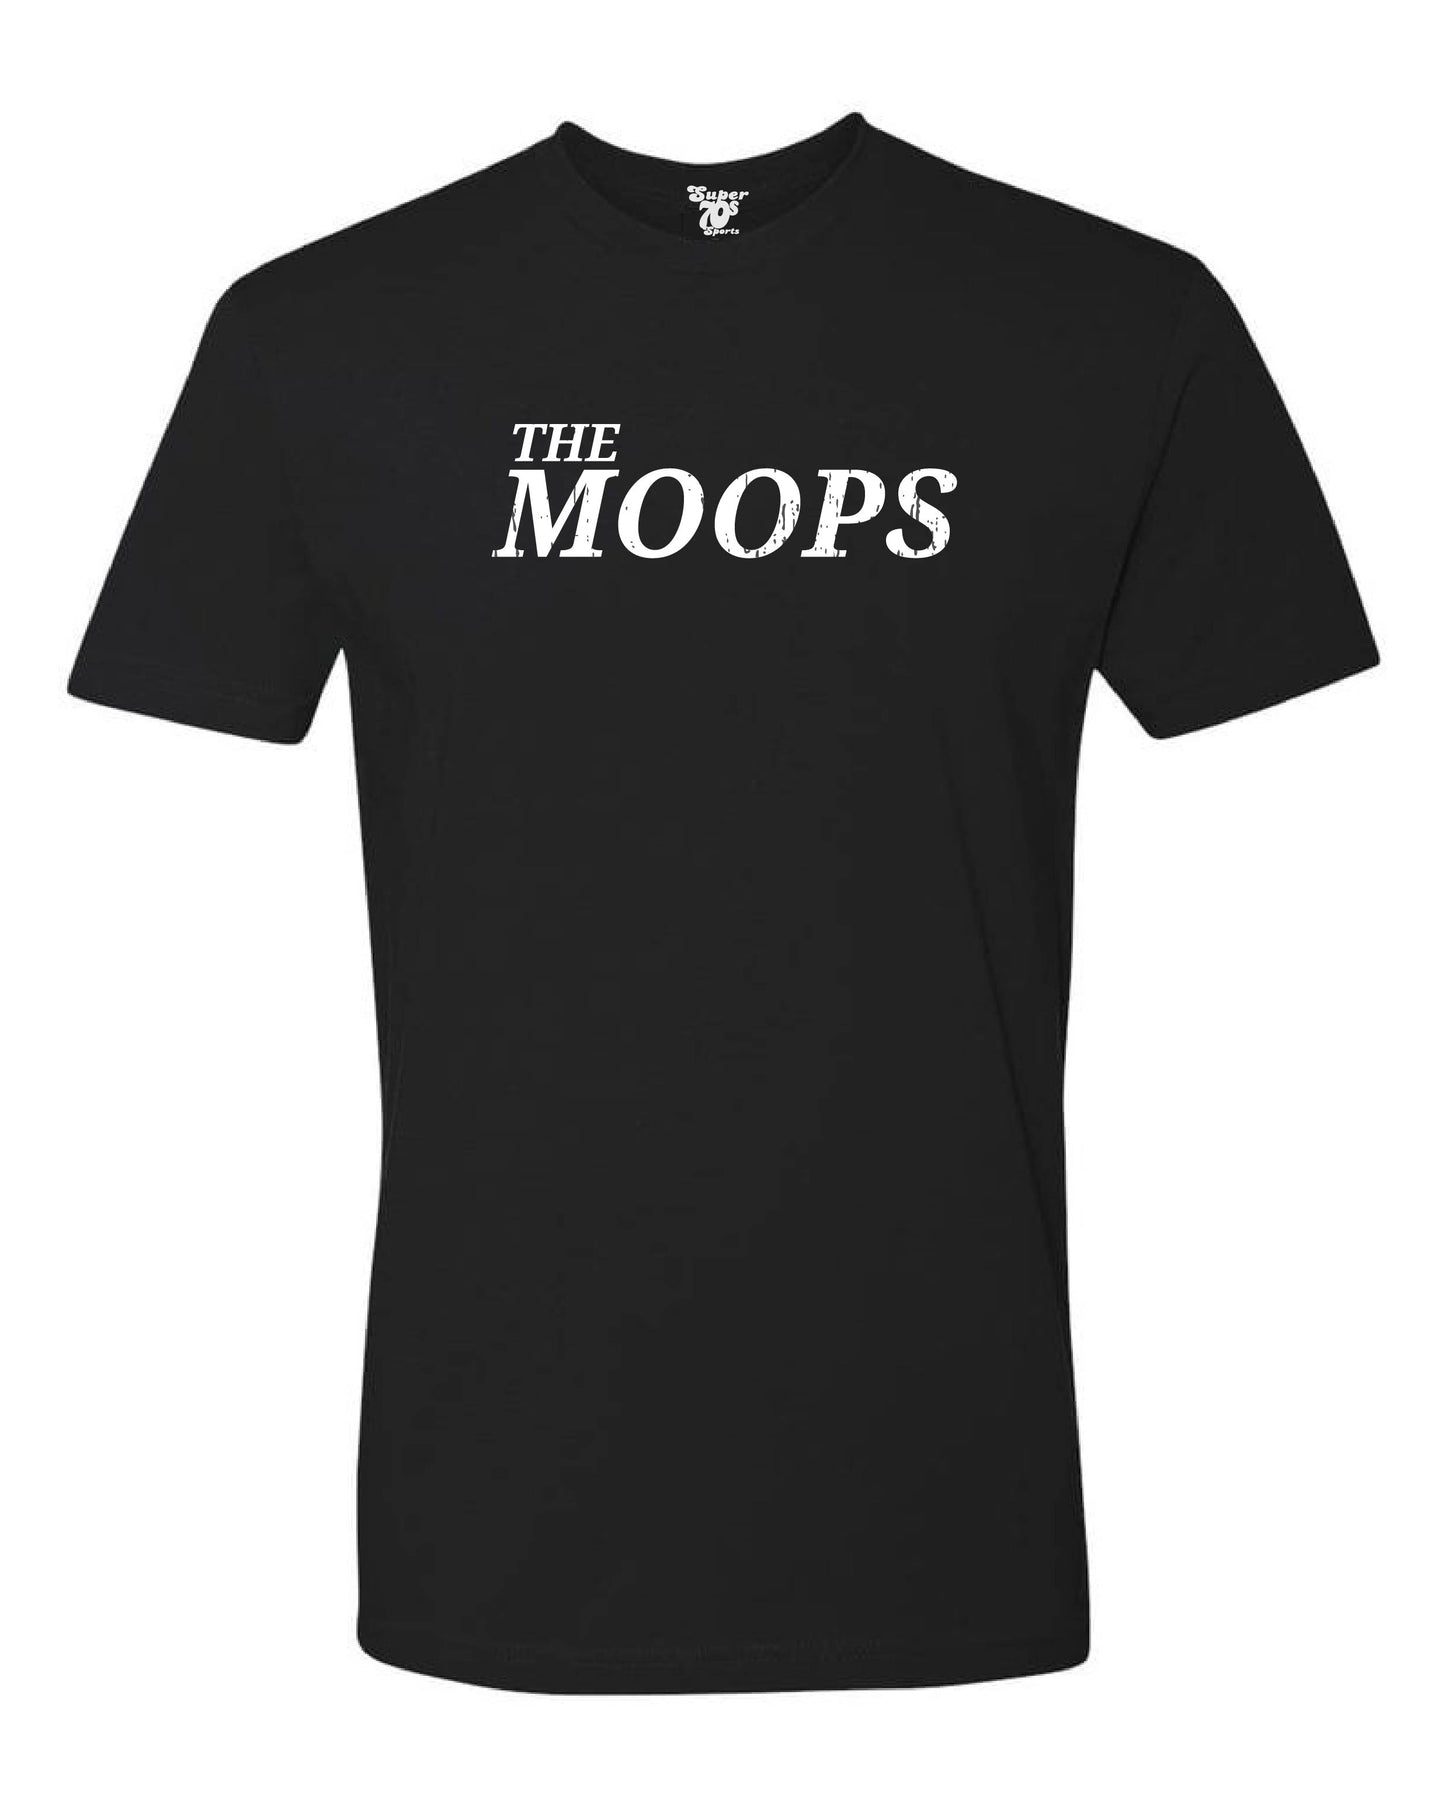 The Moops Tee